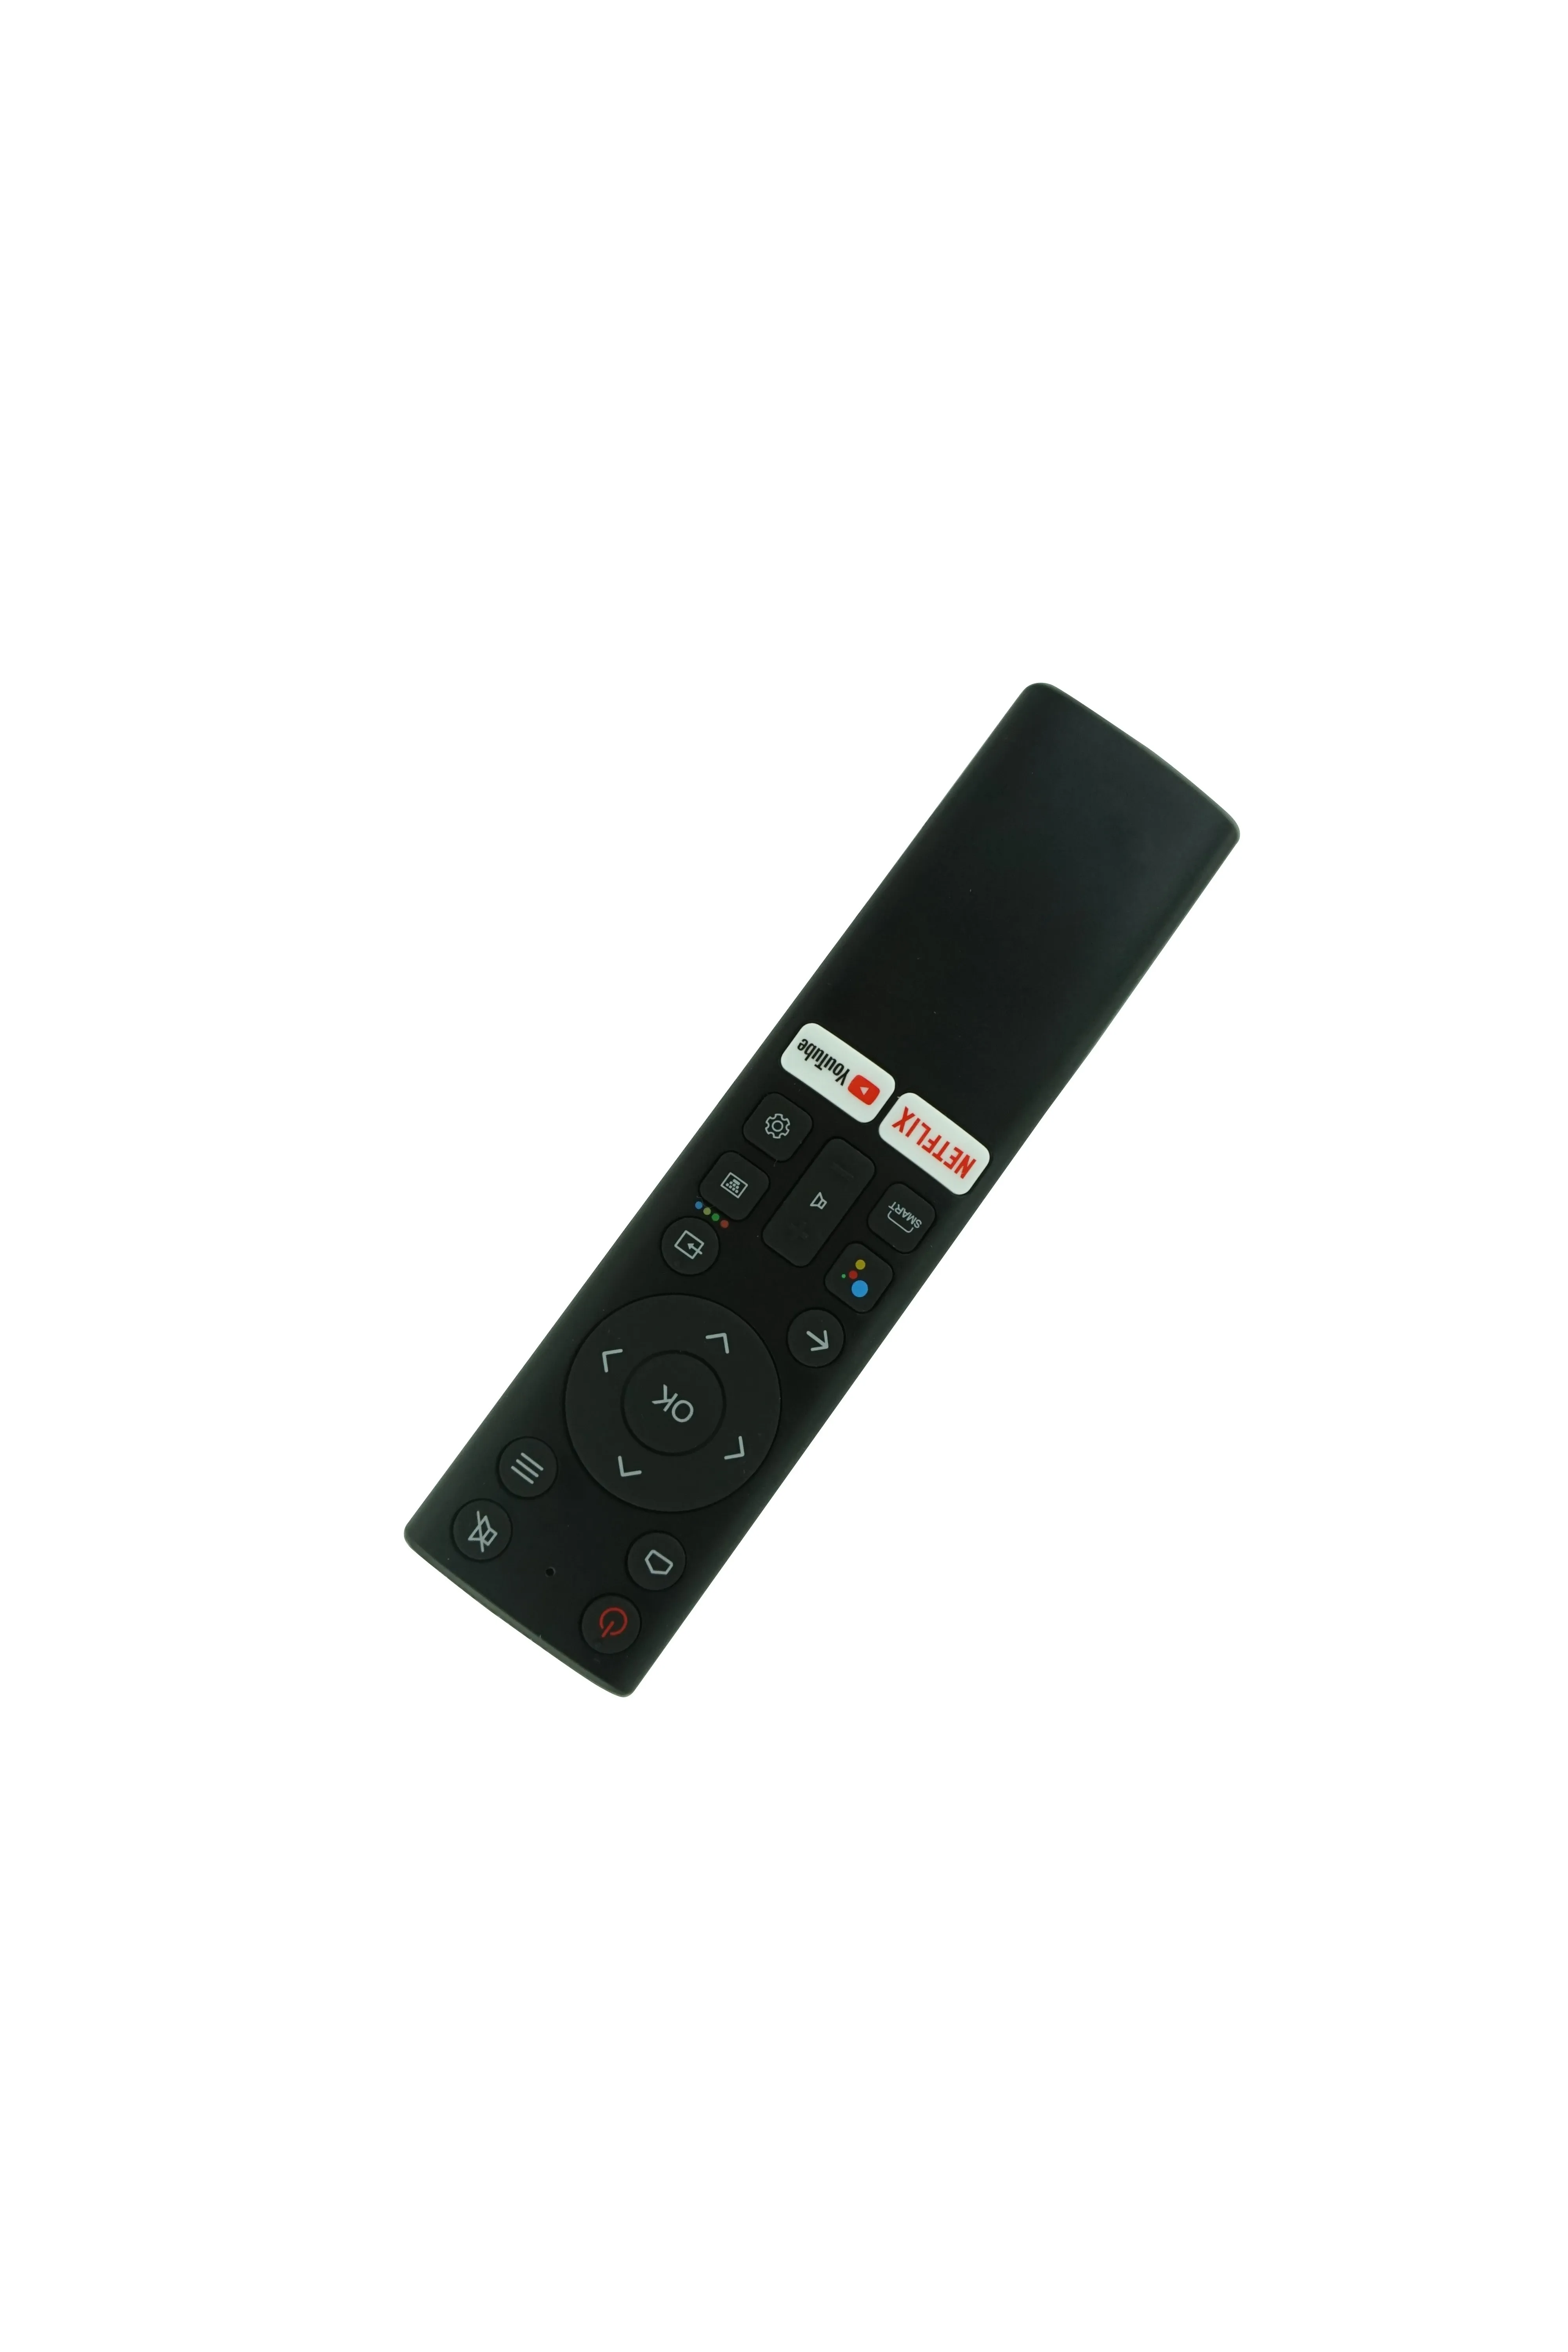 Voice Bluetooth Hitachiおよび65FXUHDおよび65FXUHD-Bおよび65FXUHD-Mおよび65FXUHD-F Google Assistant Smart LED LCD HDTV Android TVテレビのための音声Bluetoothリモコン